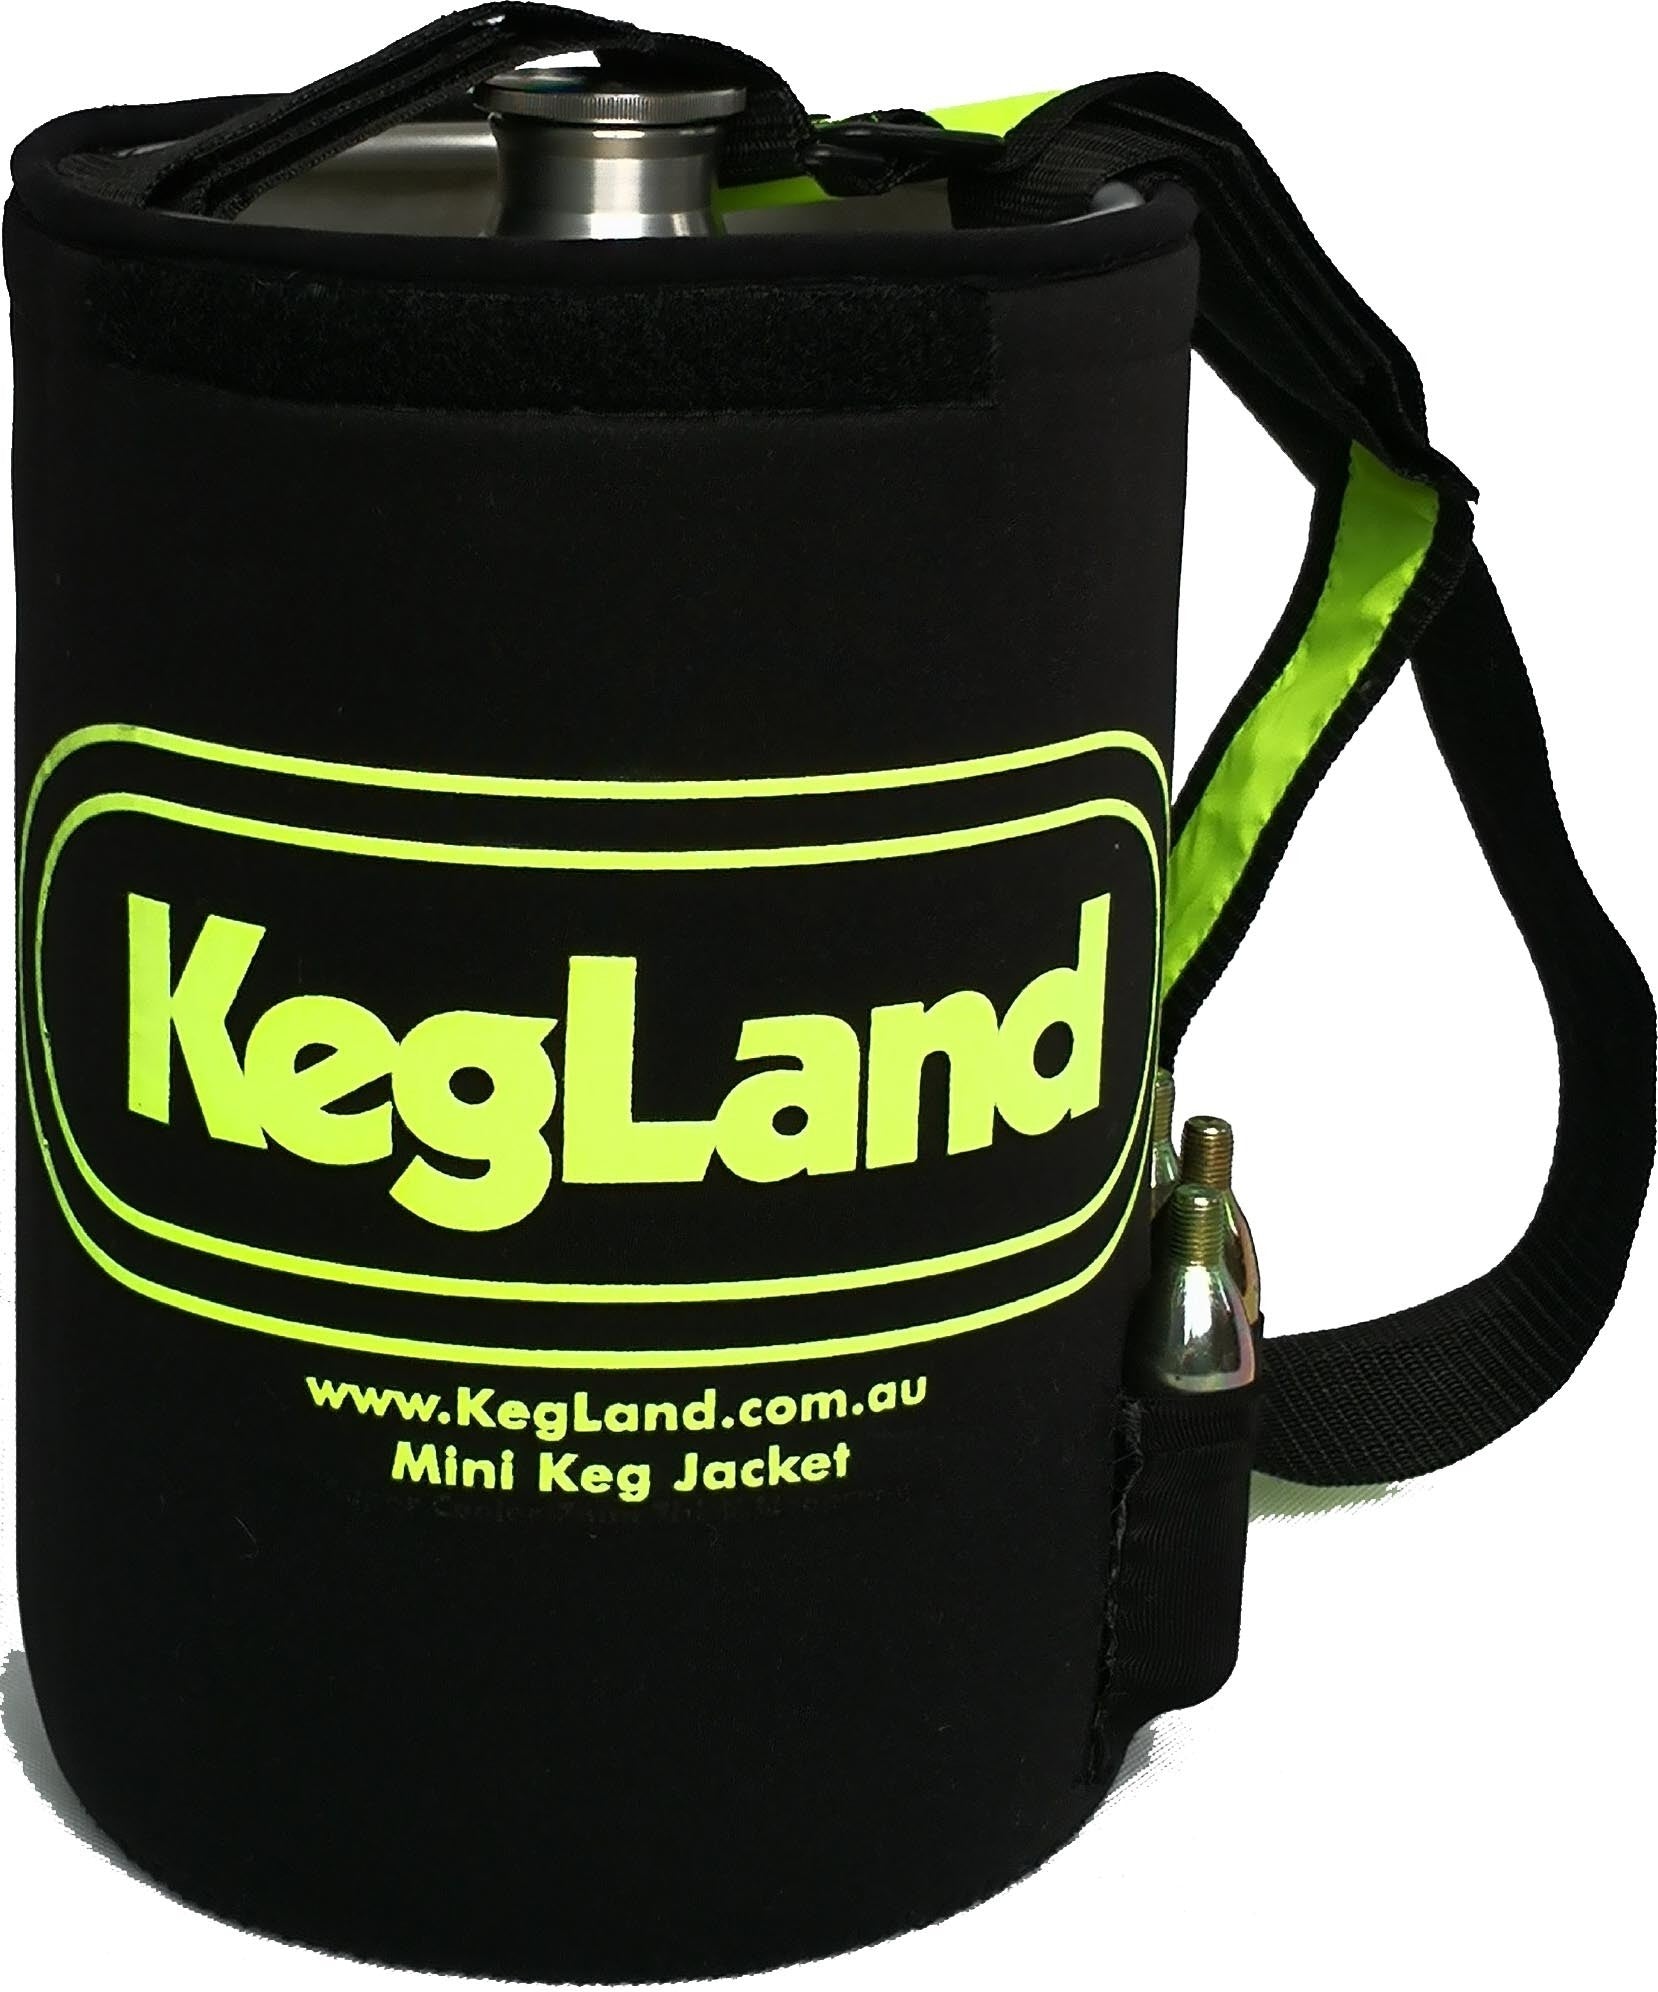 Mini Keg Jacket - All Things Fermented | Home Brew Shop NZ | Supplies | Equipment